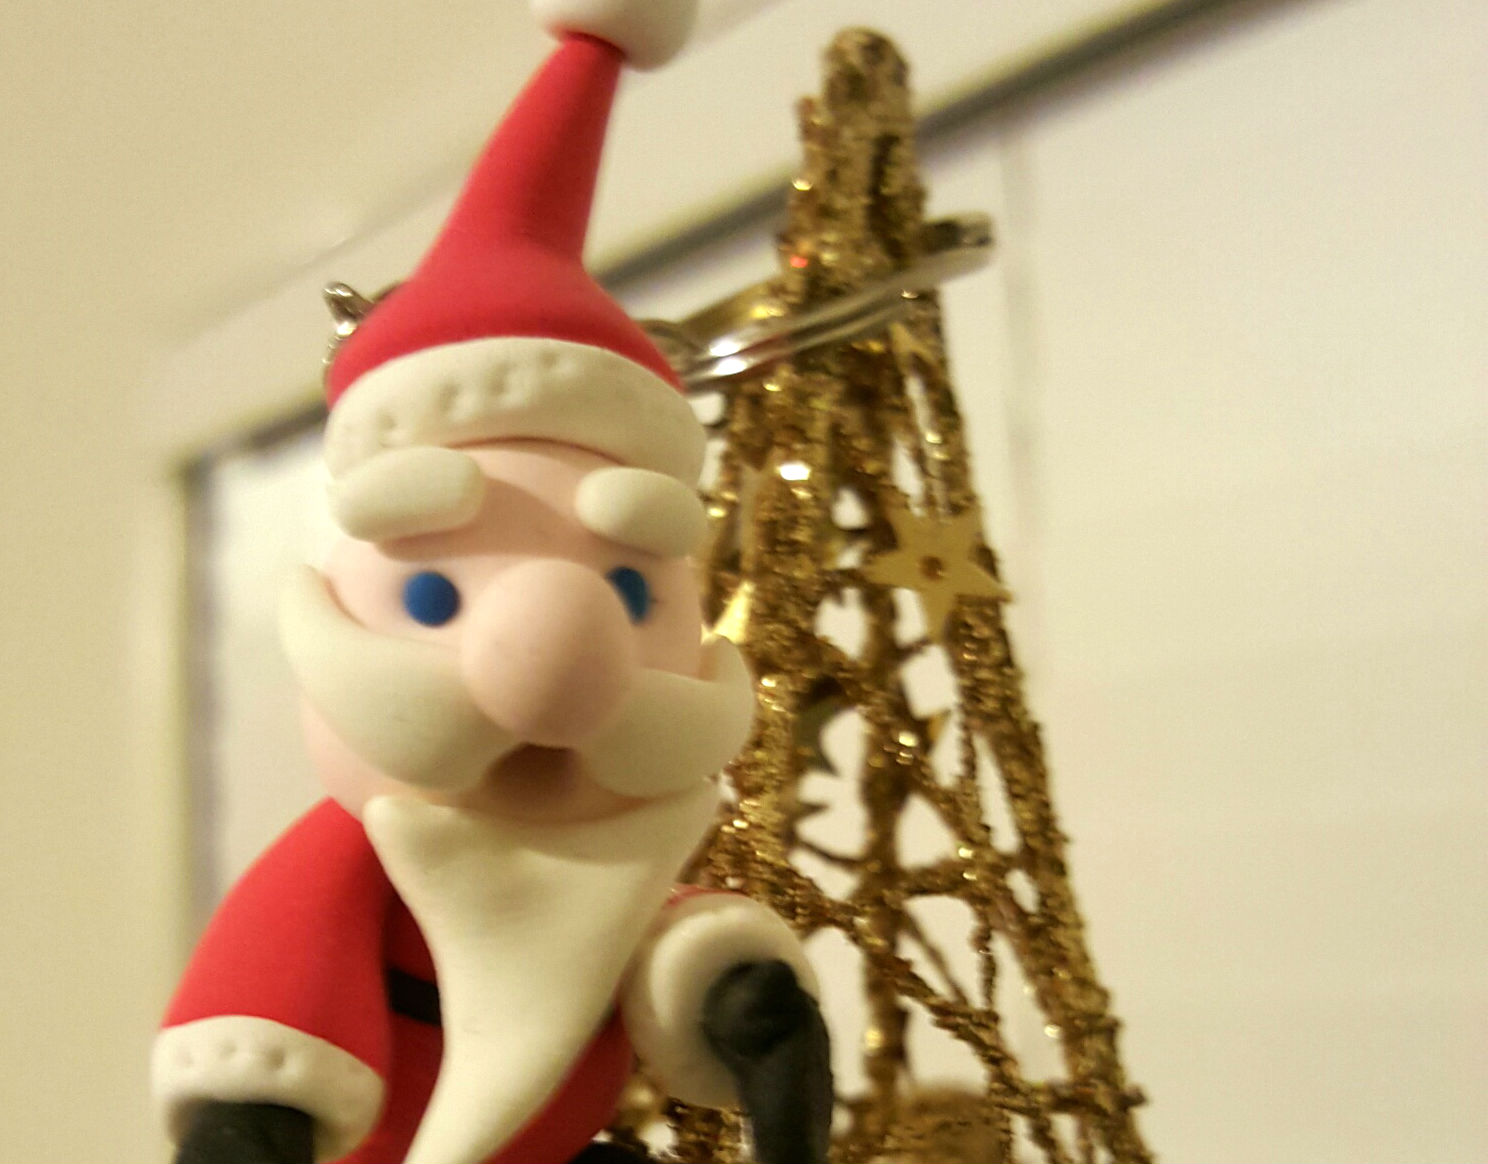 Mini Santa Claus figurine for beginners